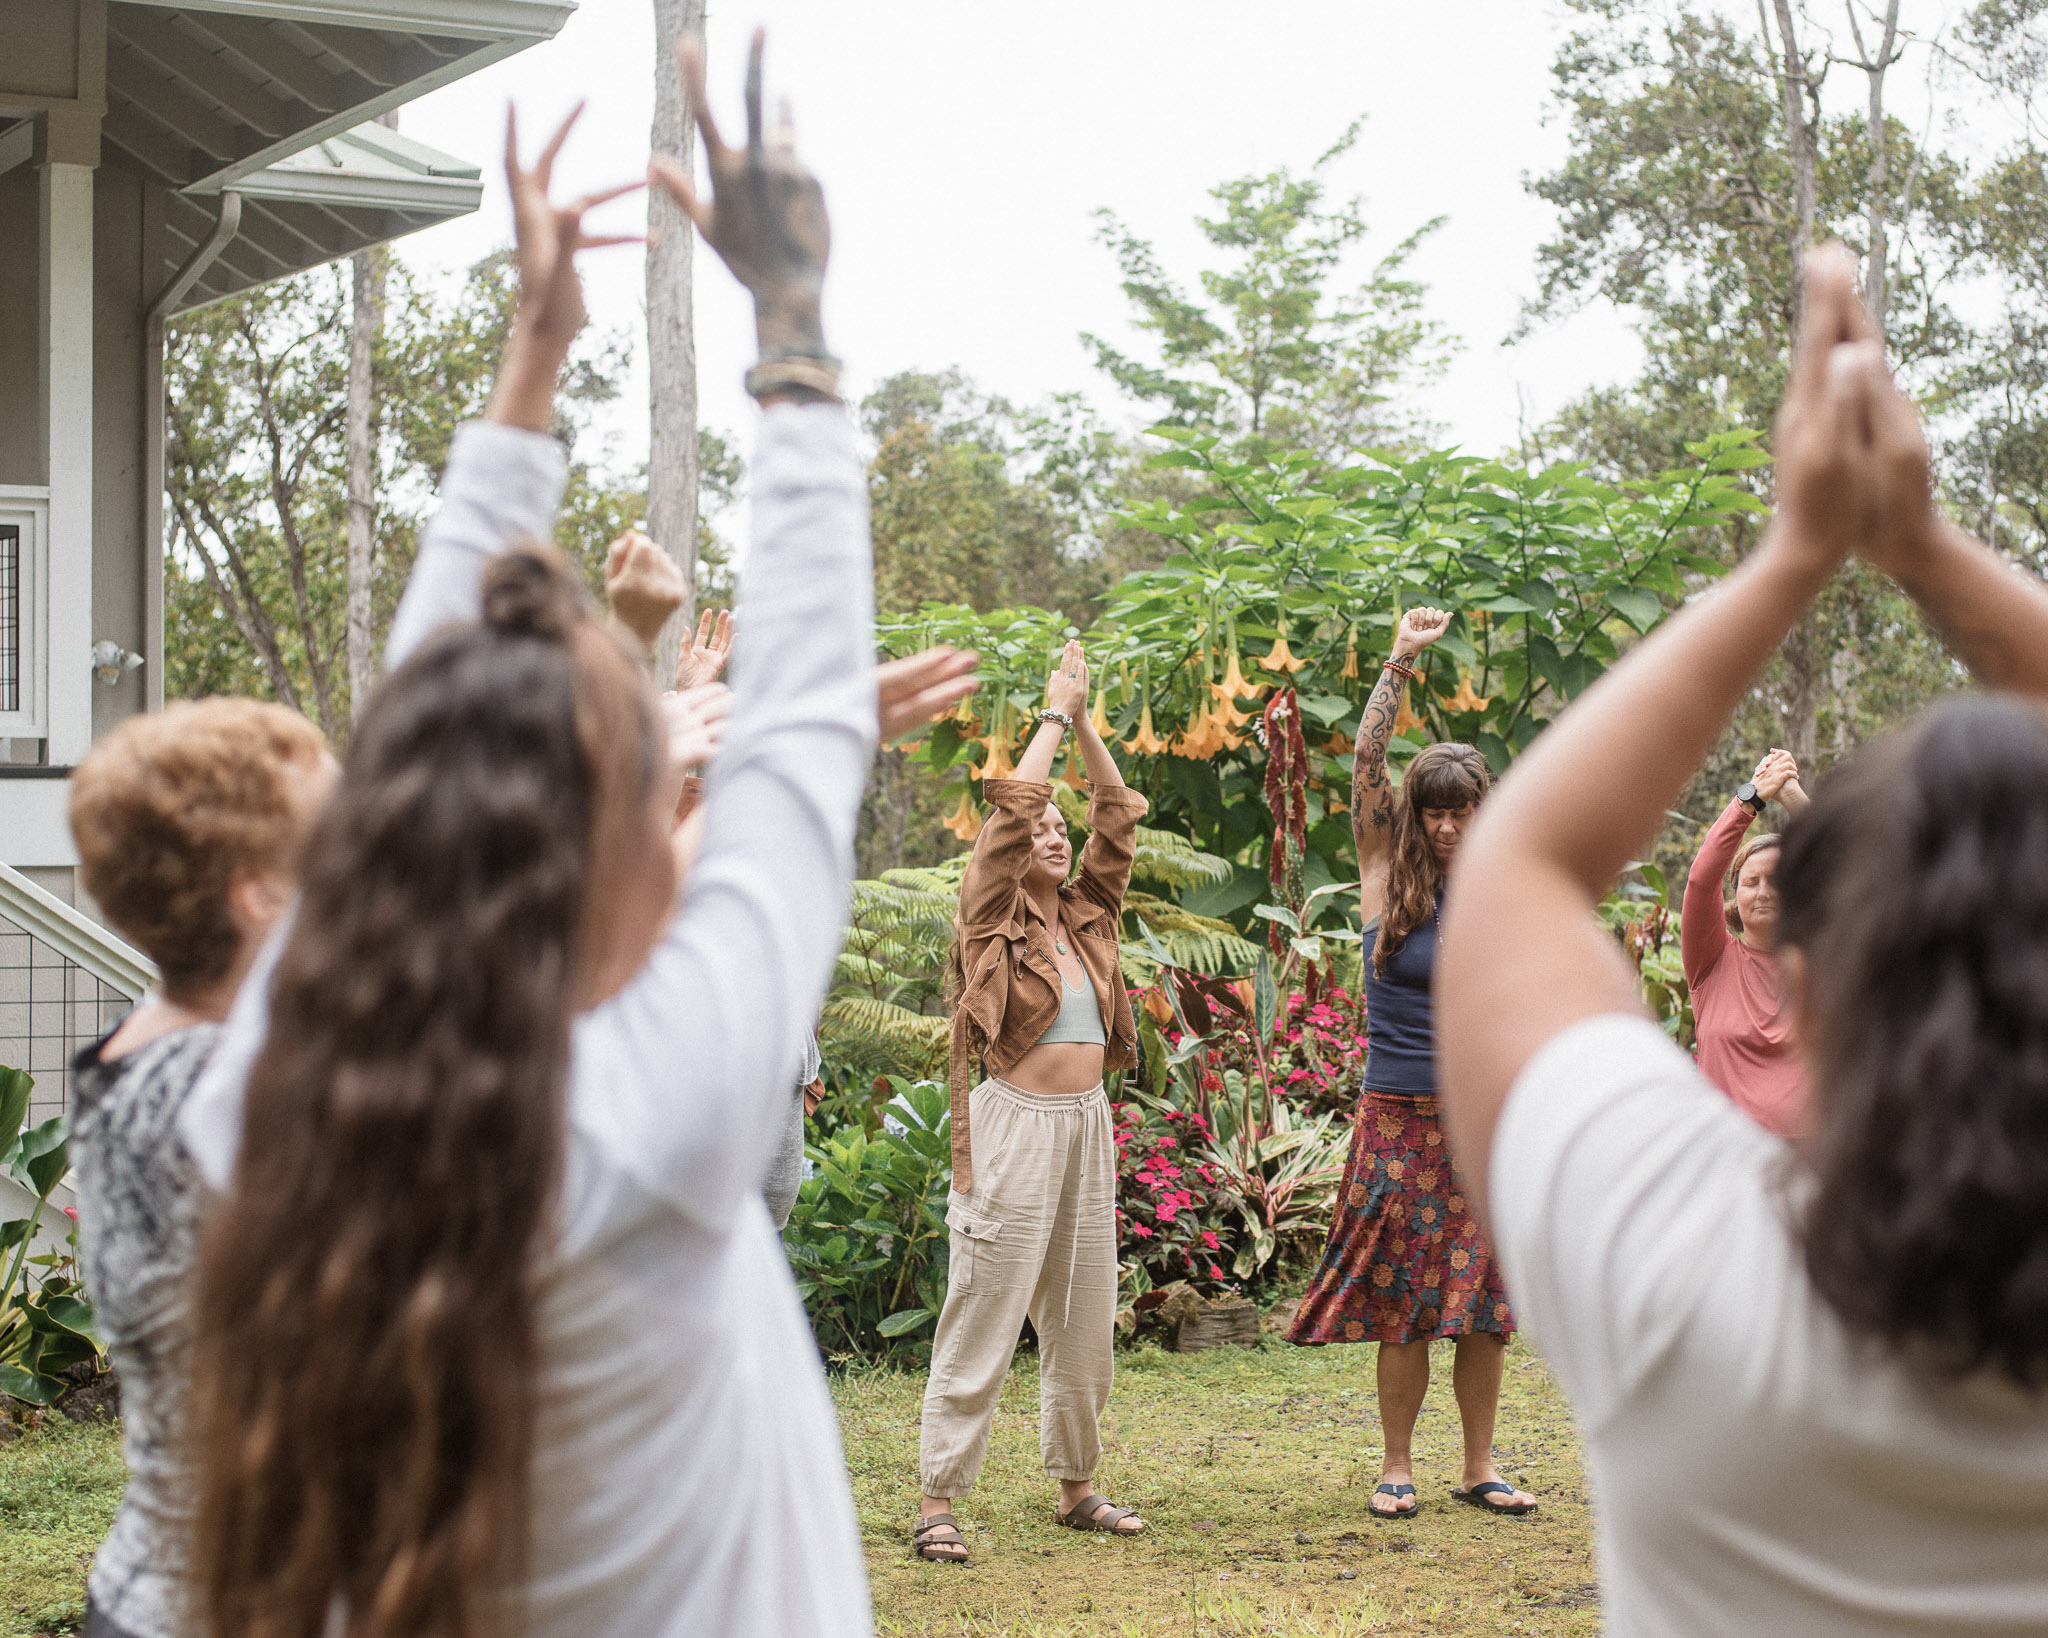 Kona Cloud Forest - Transformative Dance